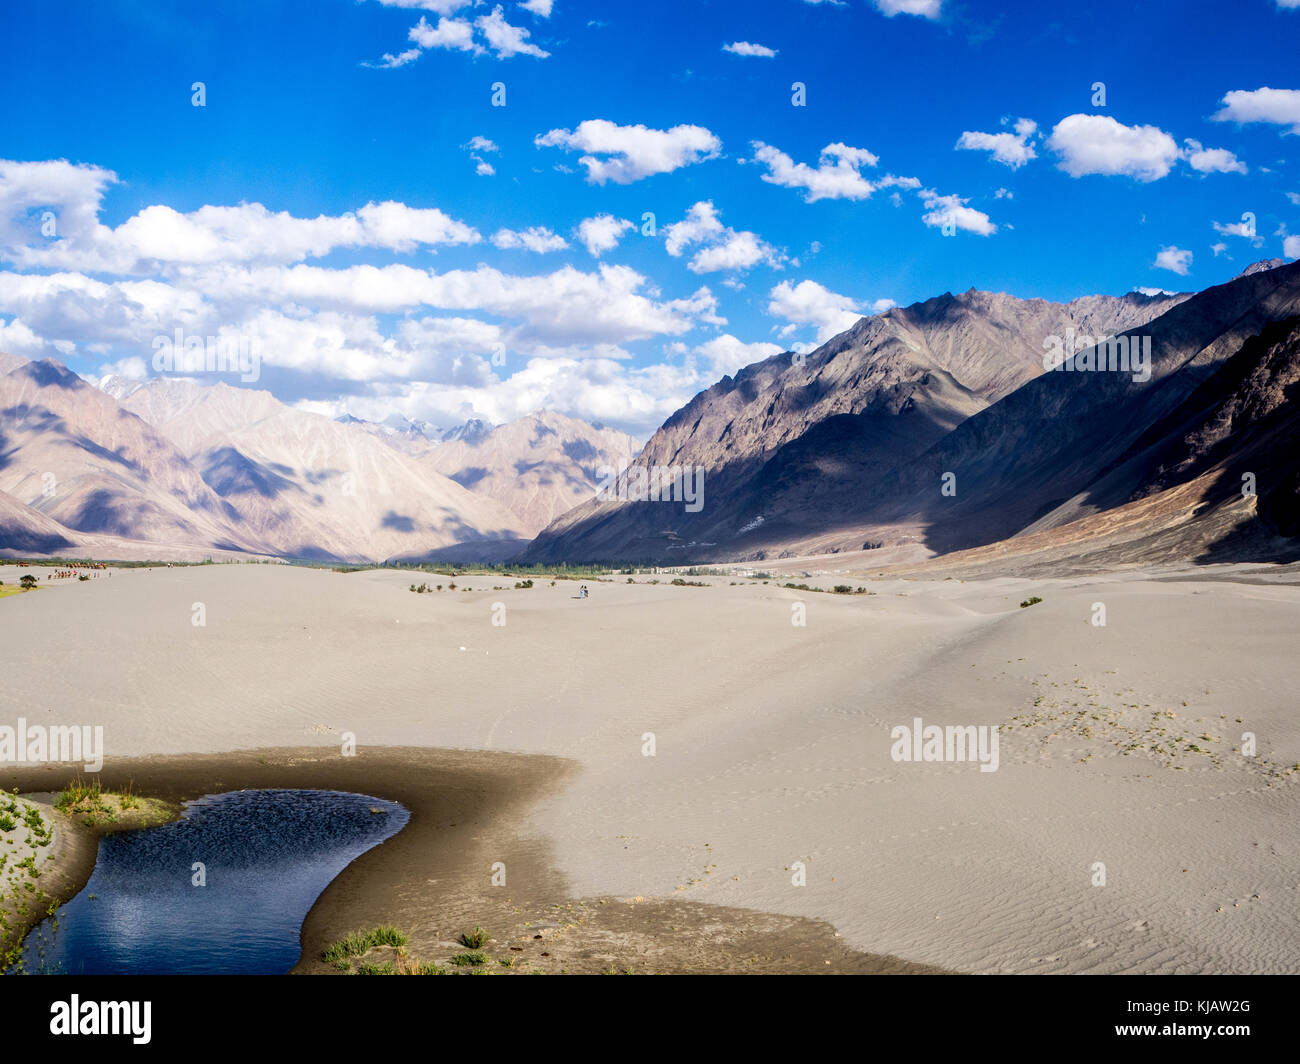 160+ Ladakh India Nubra Valley Stone Stock Photos, Pictures & Royalty-Free  Images - iStock